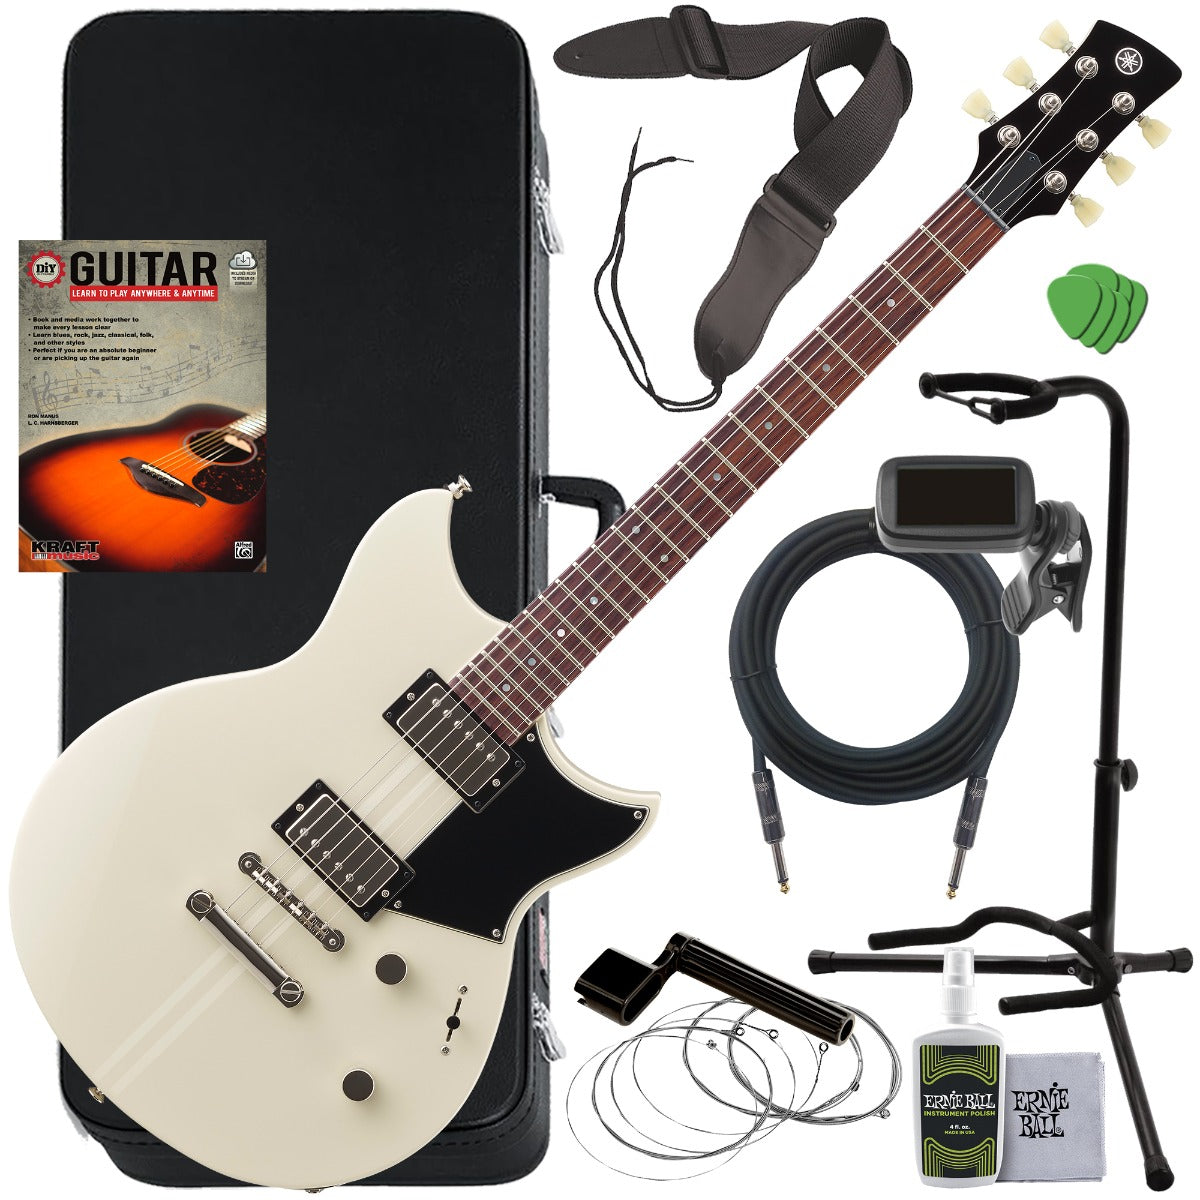 Yamaha RSE20 Revstar Element Electric Guitar - Vintage White COMPLETE GUITAR BUNDLE